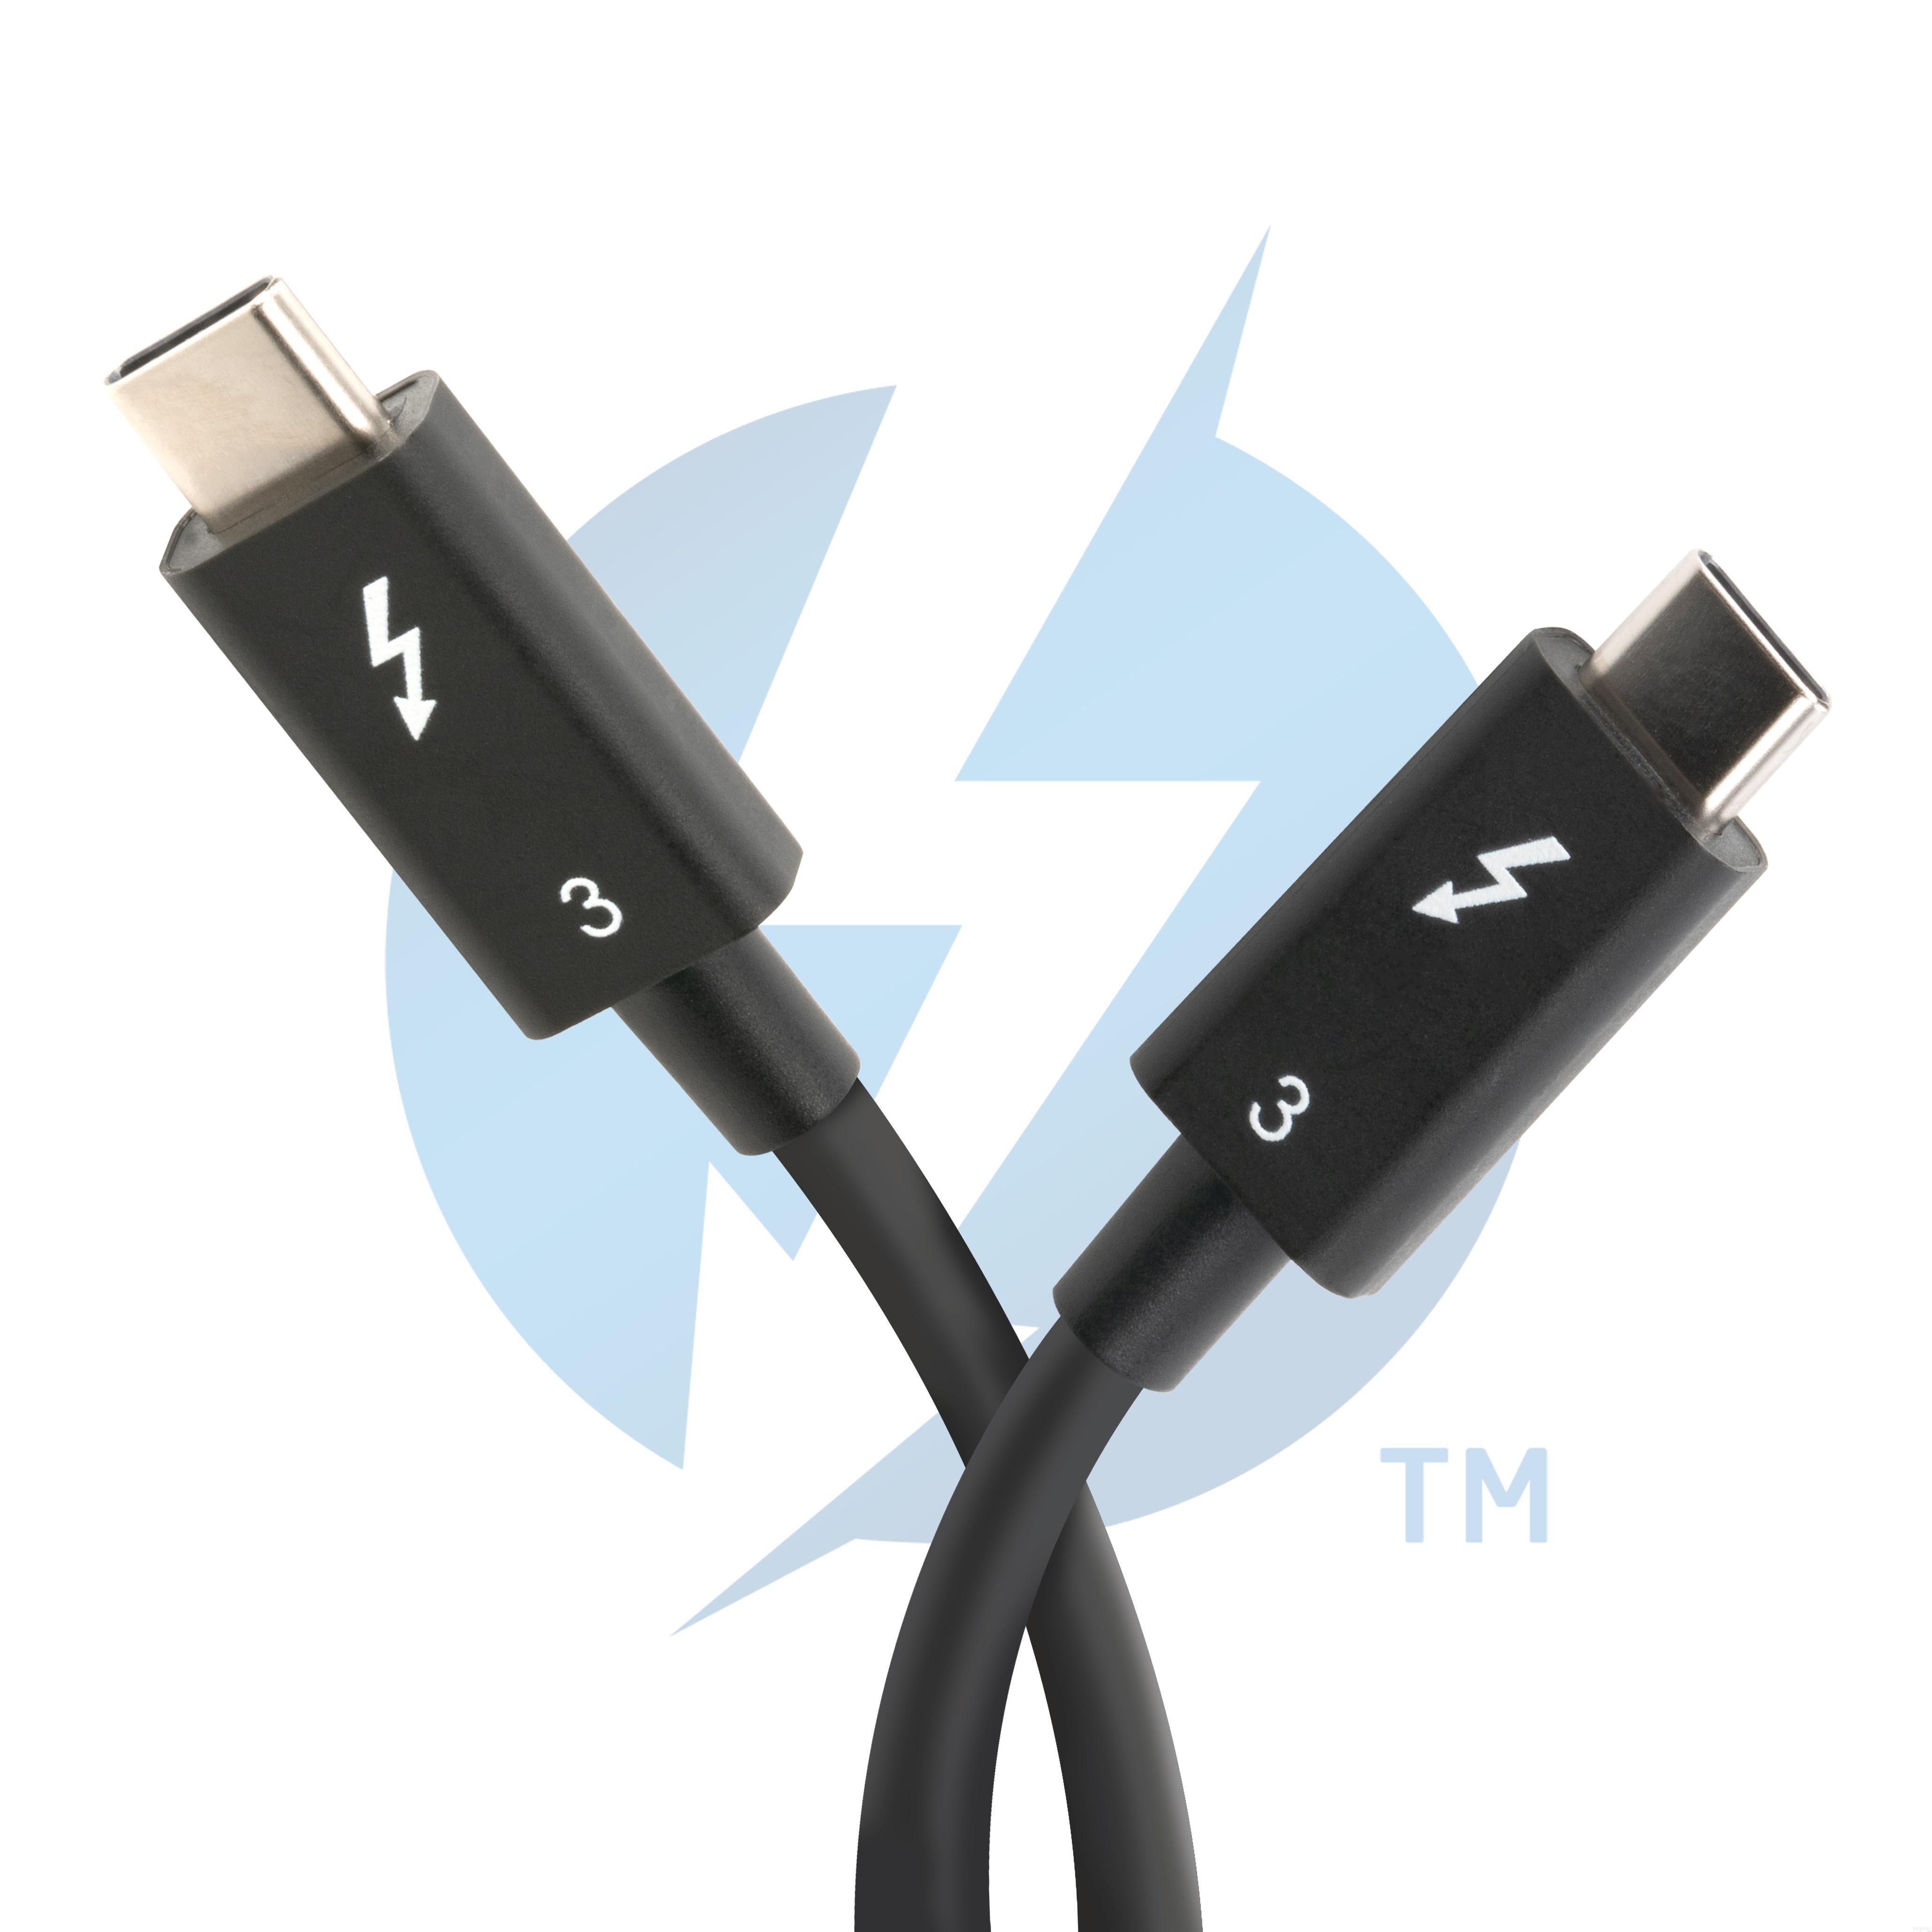 Plugable Thunderbolt 3 Cable (40Gbps, 2.6ft/0.8m) – Plugable